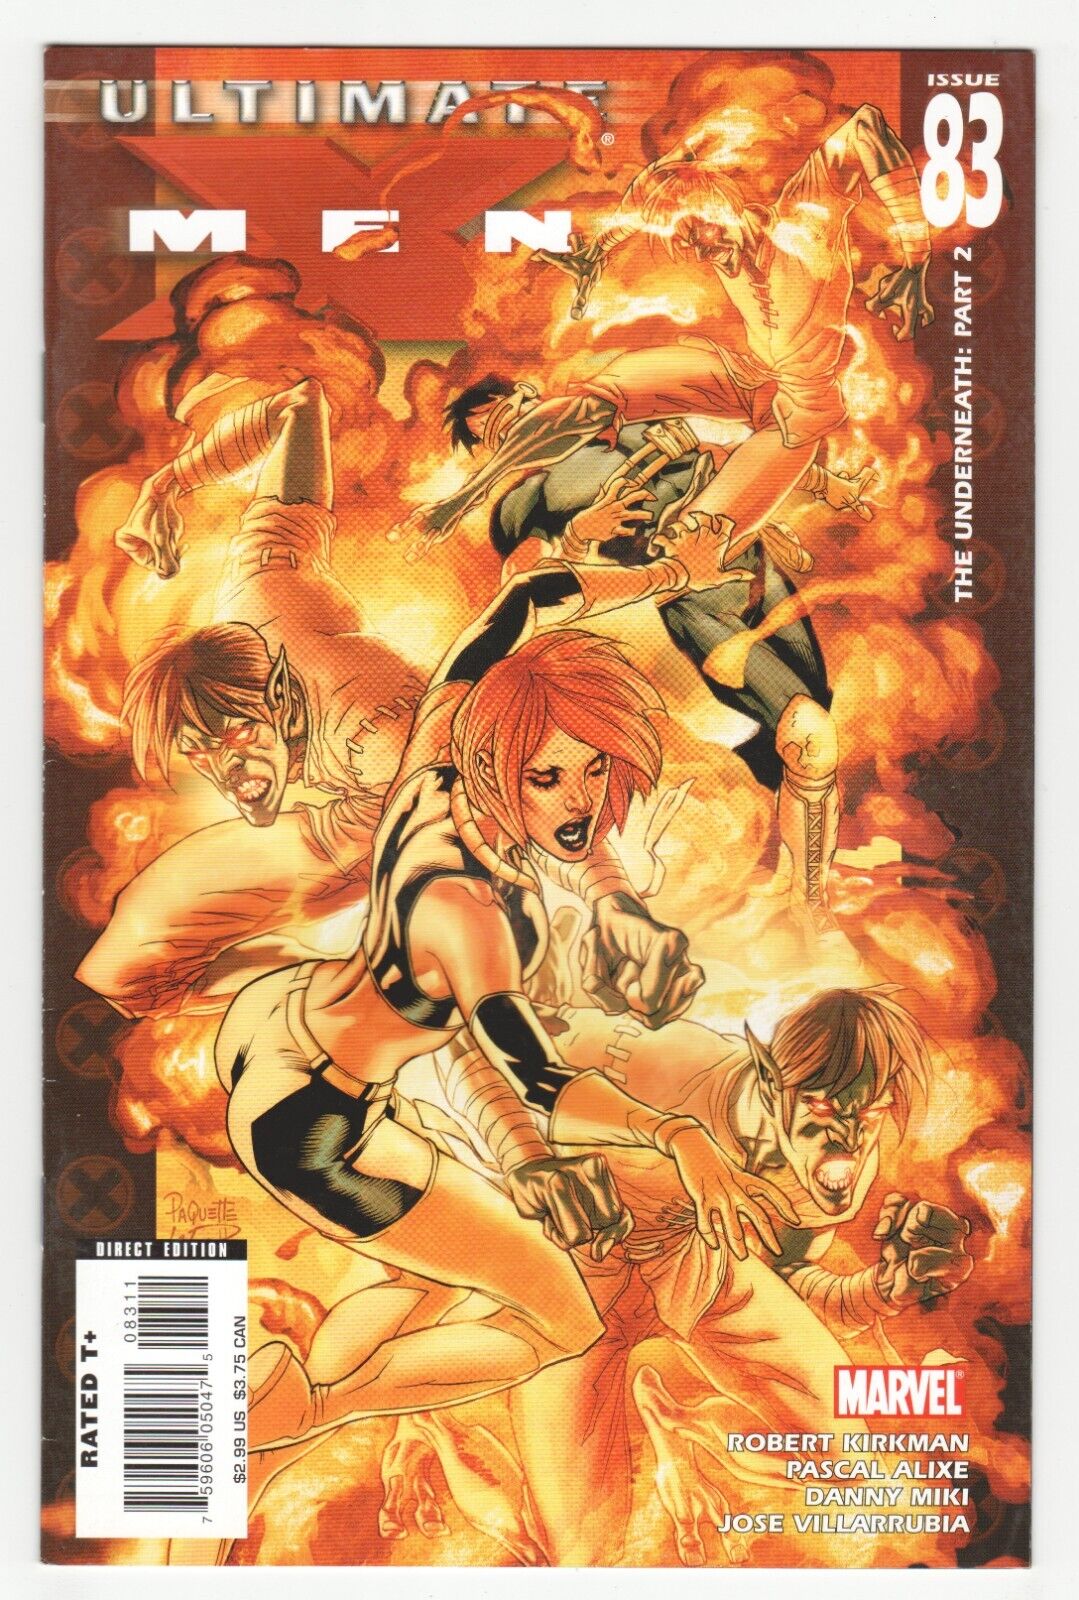 Ultimate X-Men #83 - ROBERT KIRKMAN Story - Yanick Paquette Cover Art FN/VF 7.0